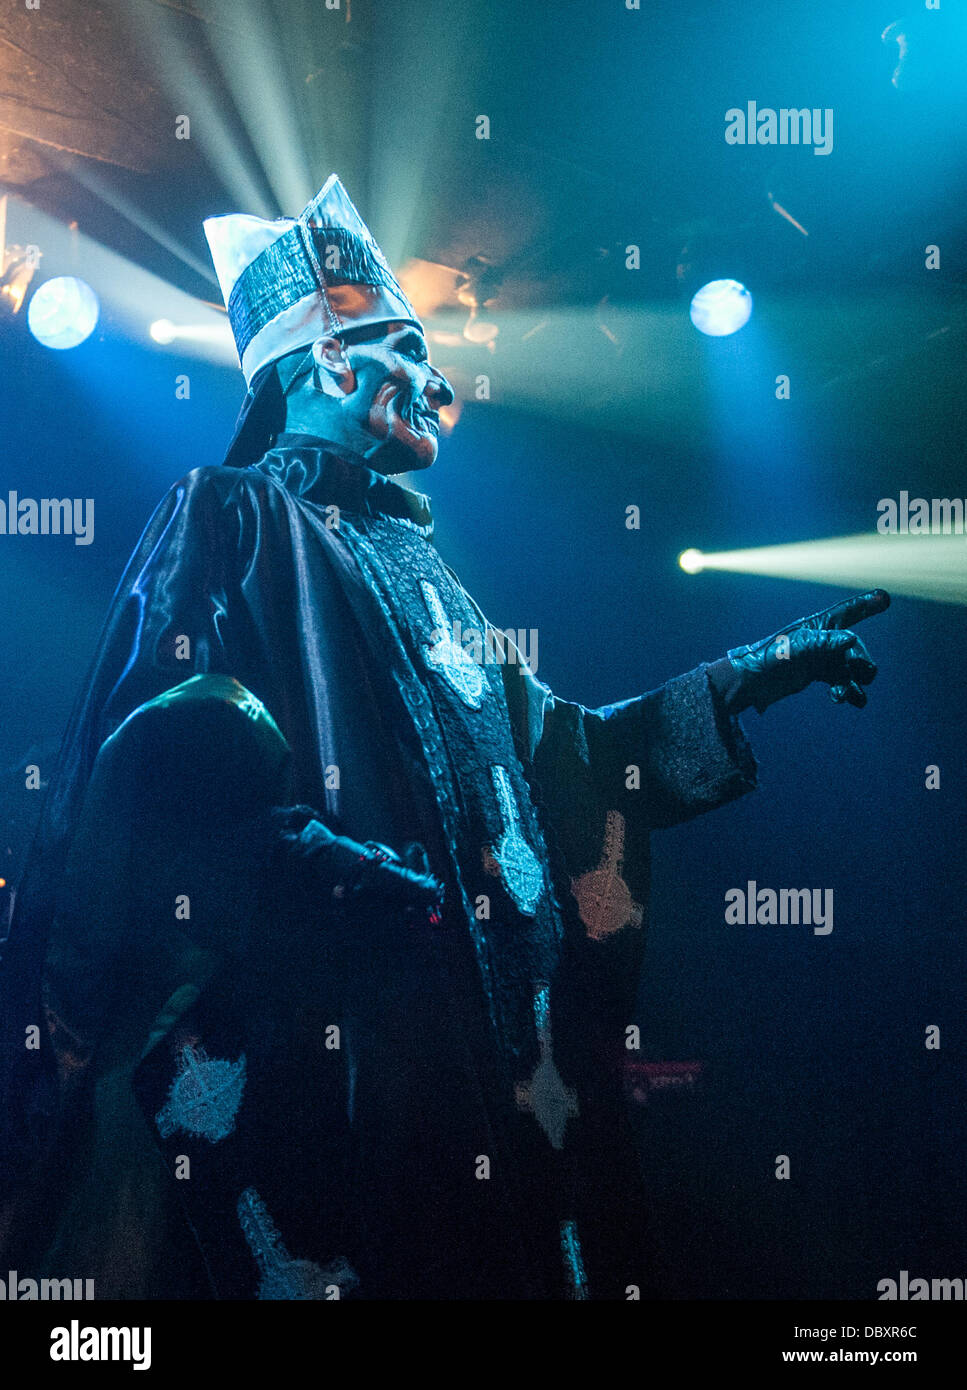 Heavy metal band Ghost esecuzione a doppia porta in Chicago, 2013 Foto Stock